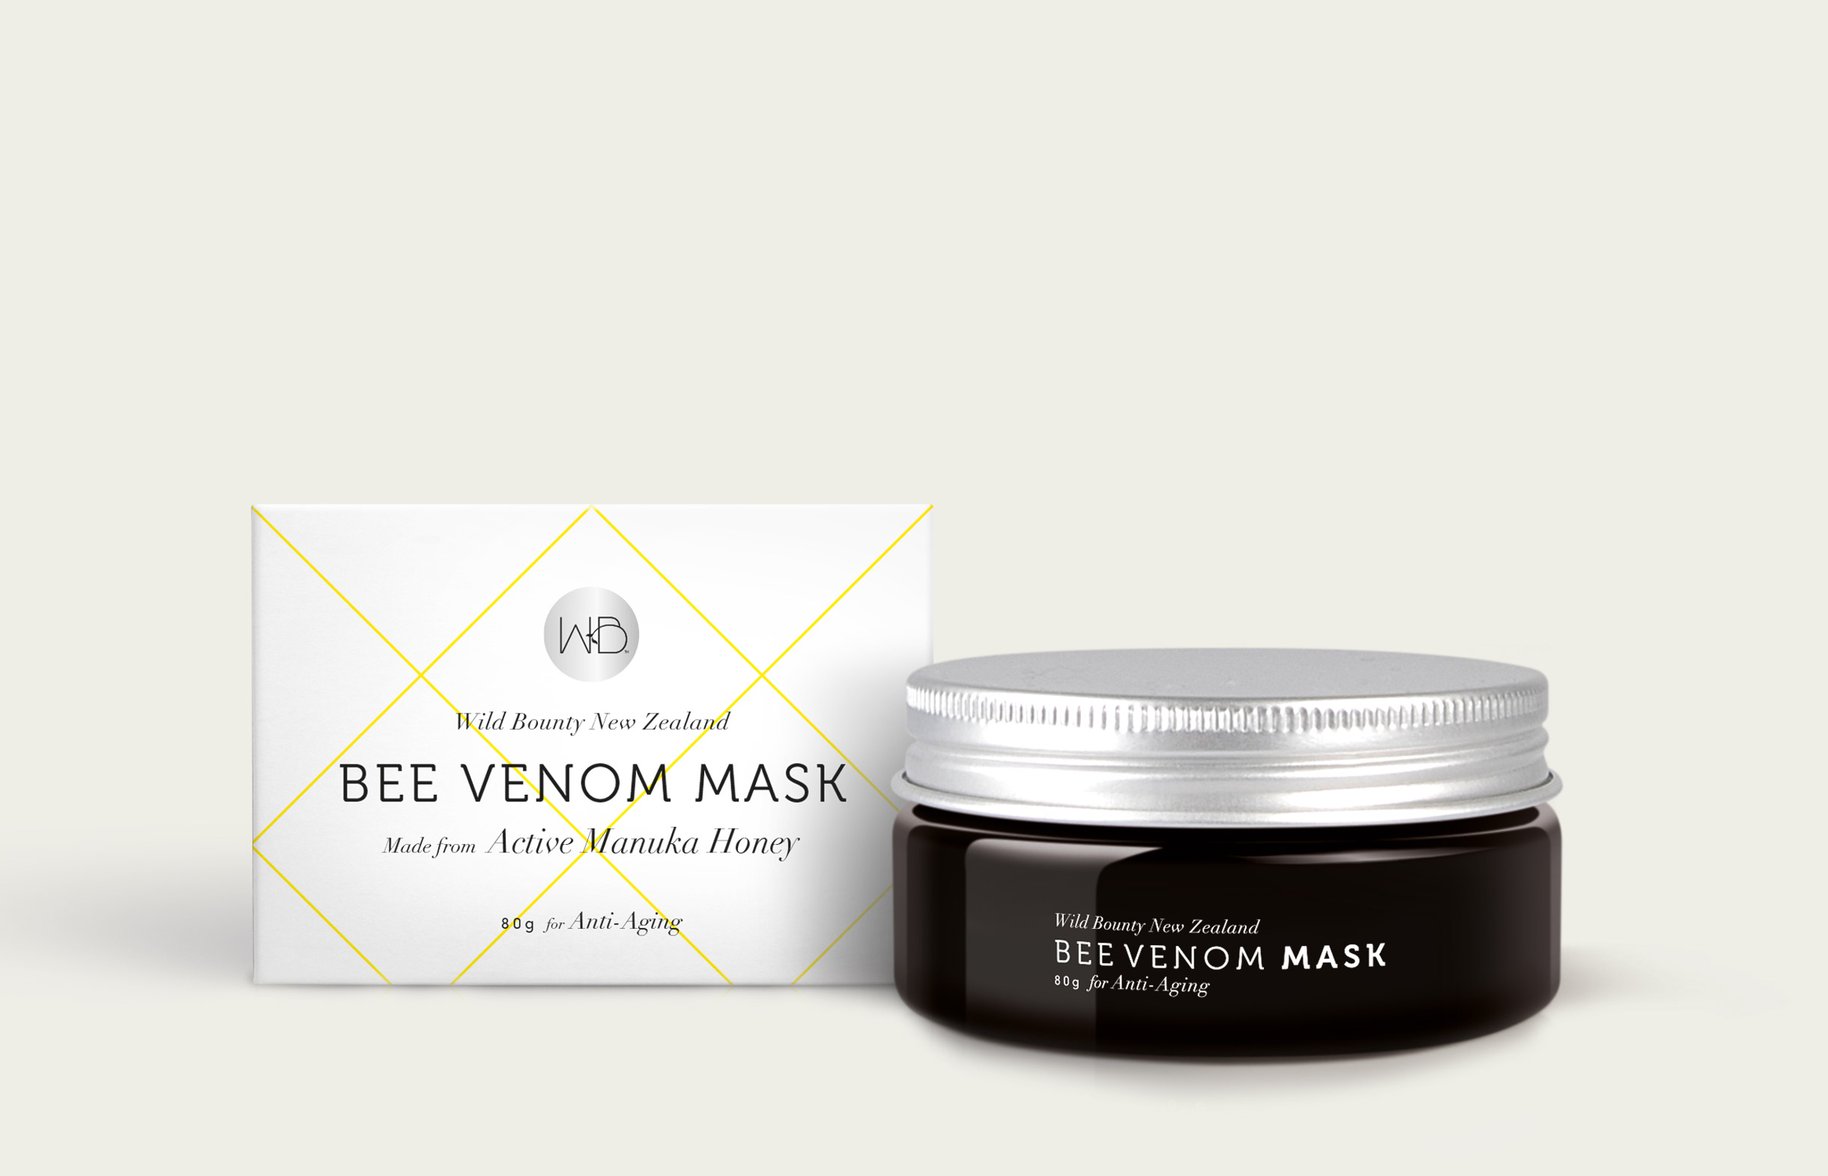 Wild Bounty bee venom mask packaging